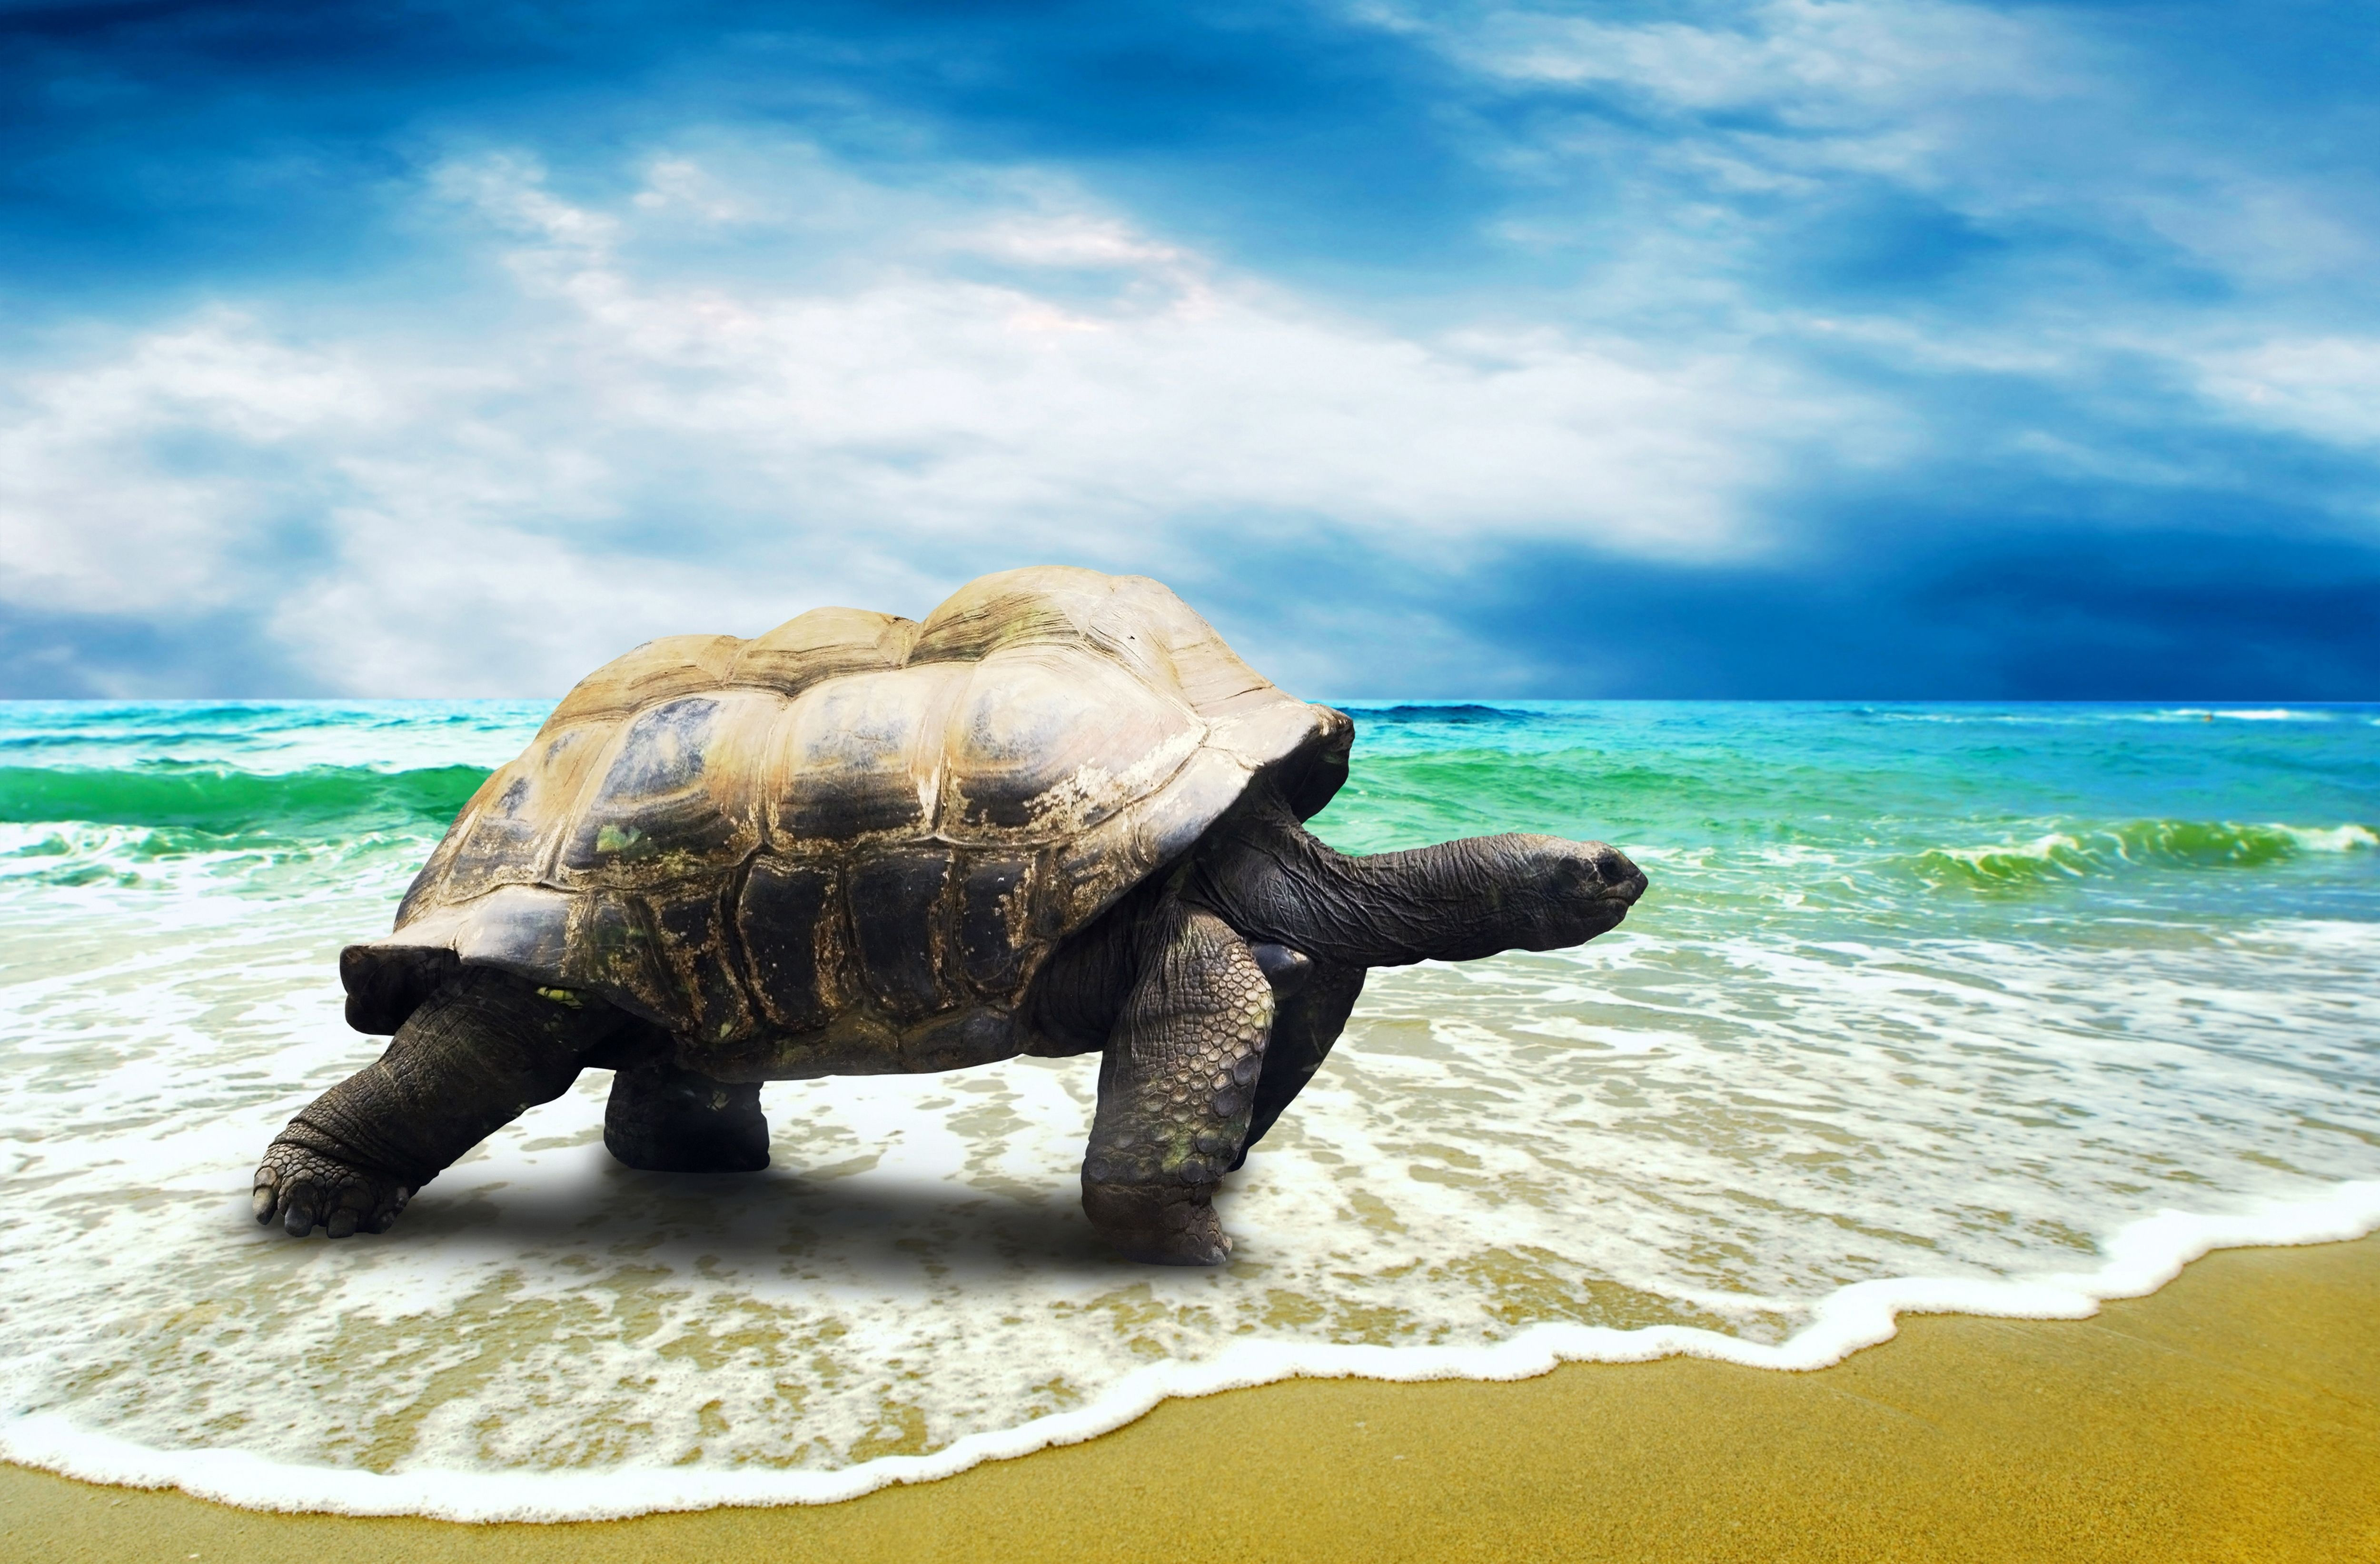 4k Ultra HD Turtle Wallpaper Background Image